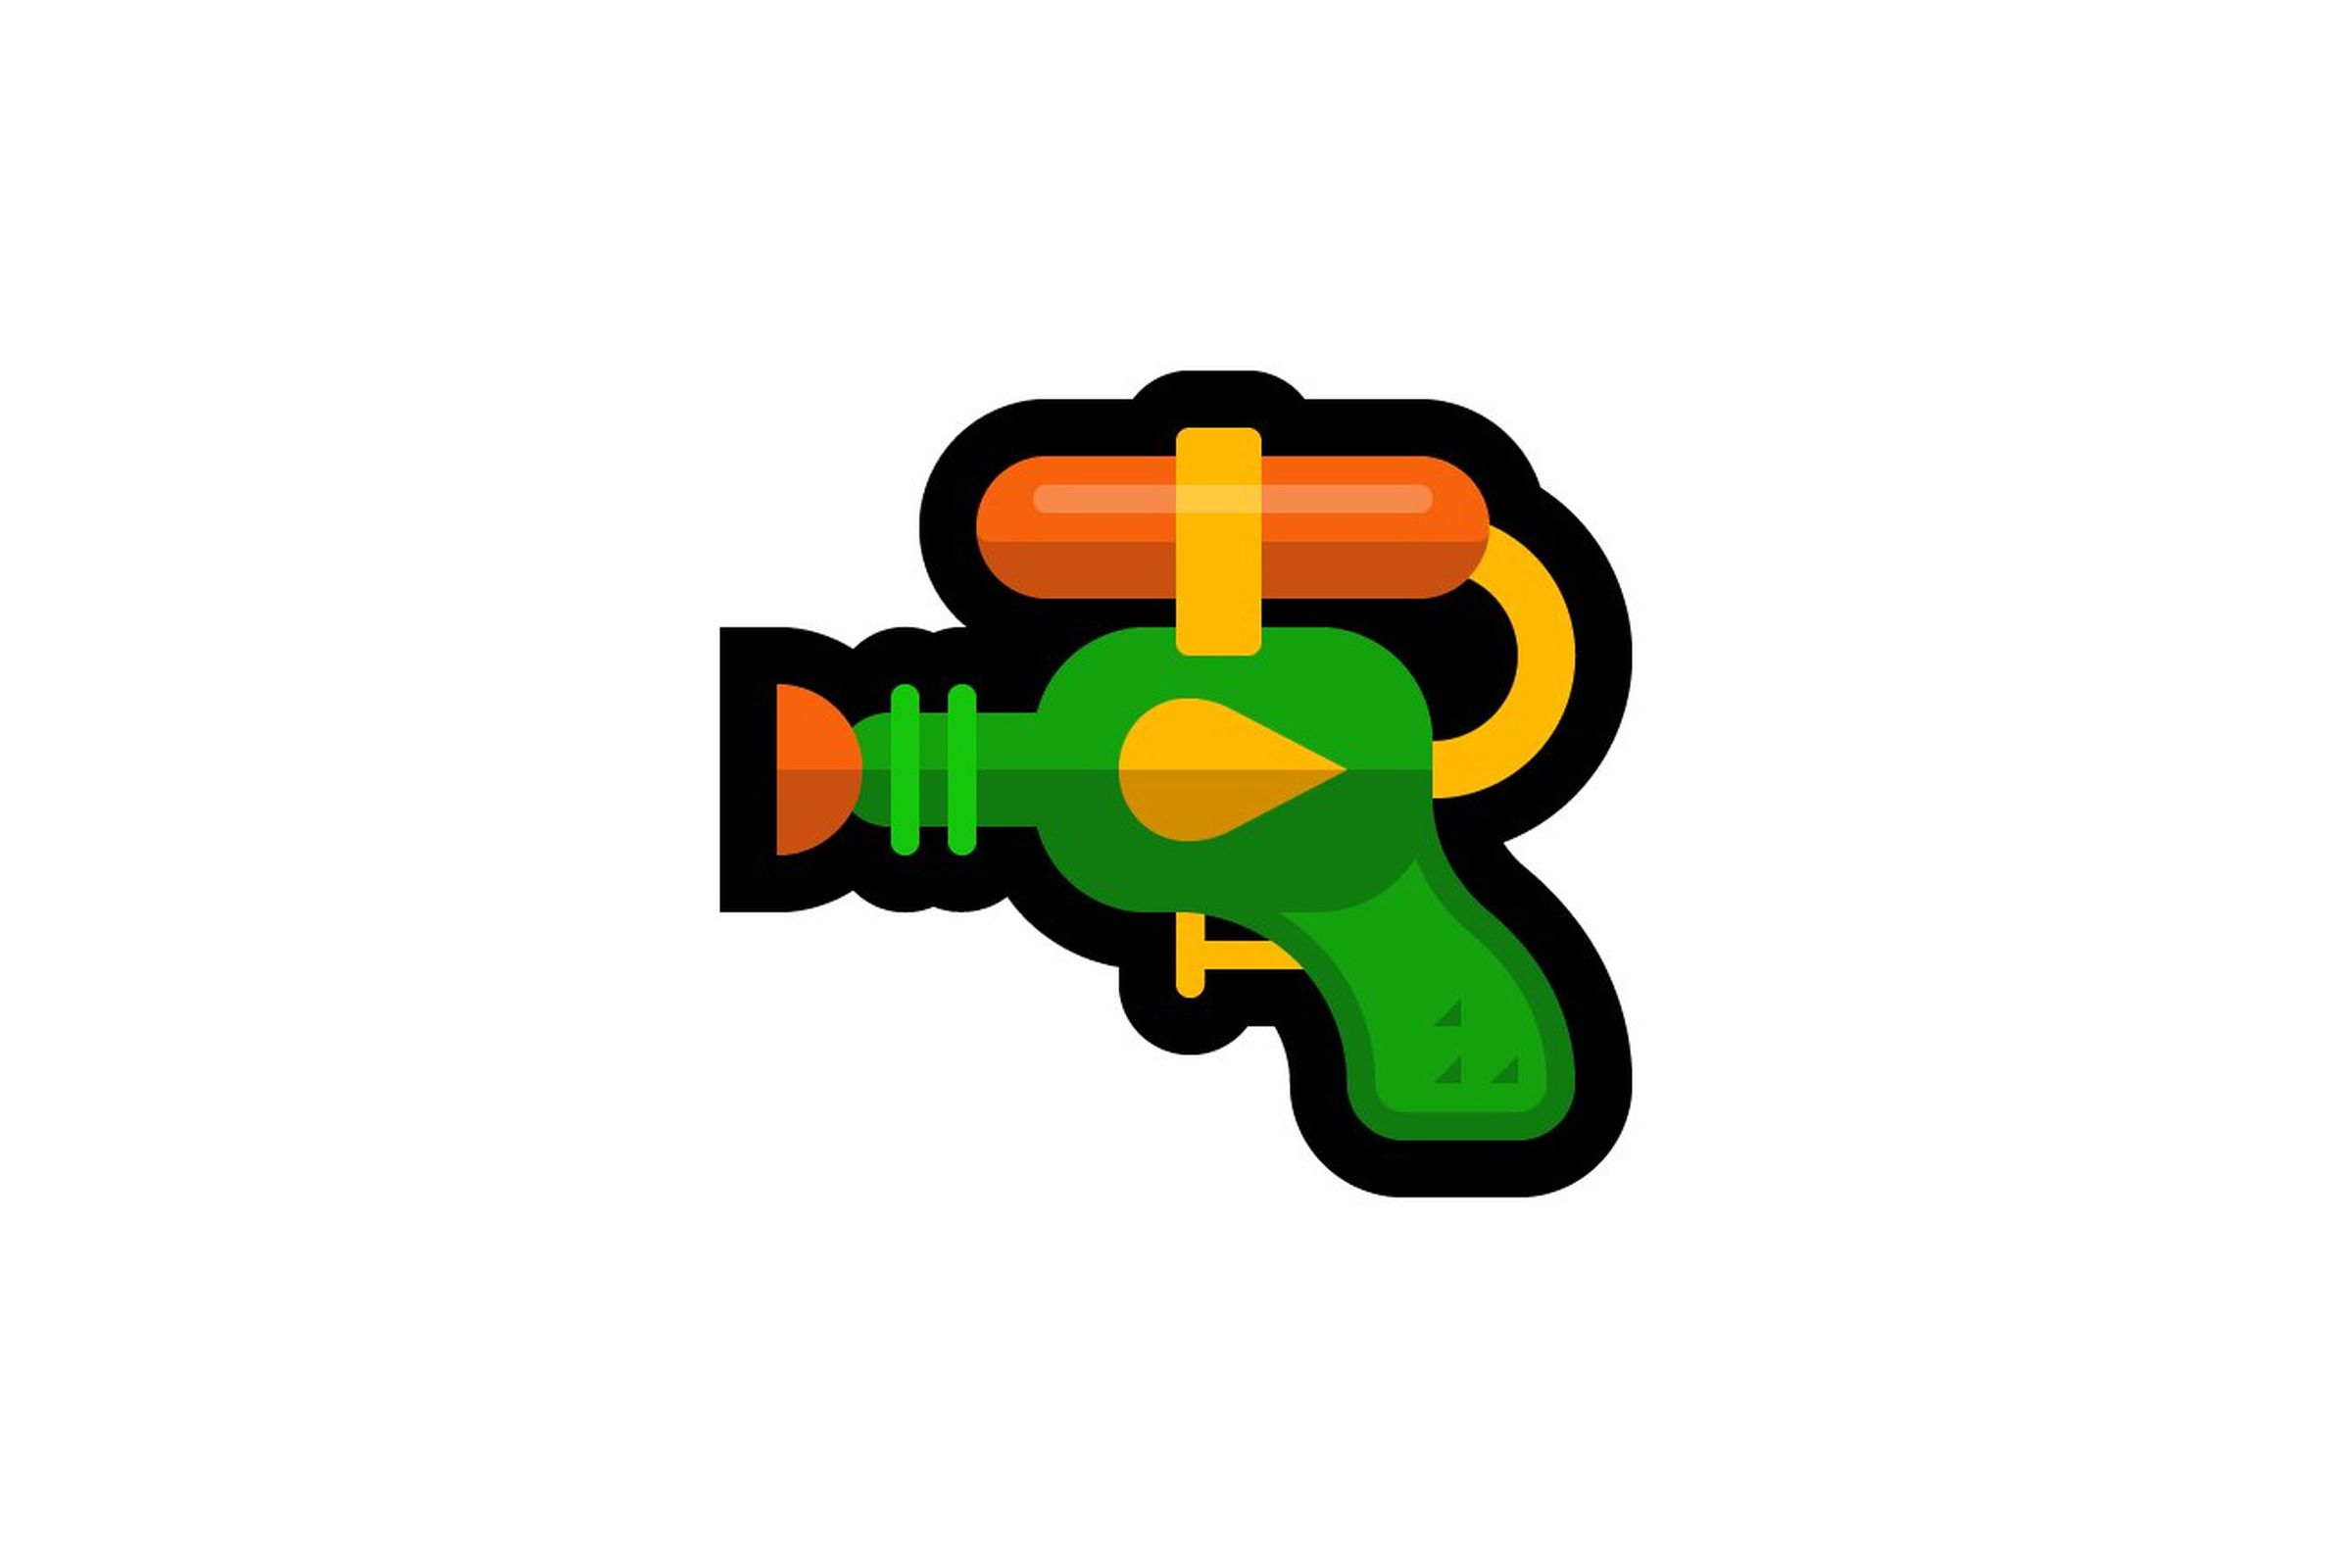 New pistol emoji for Windows